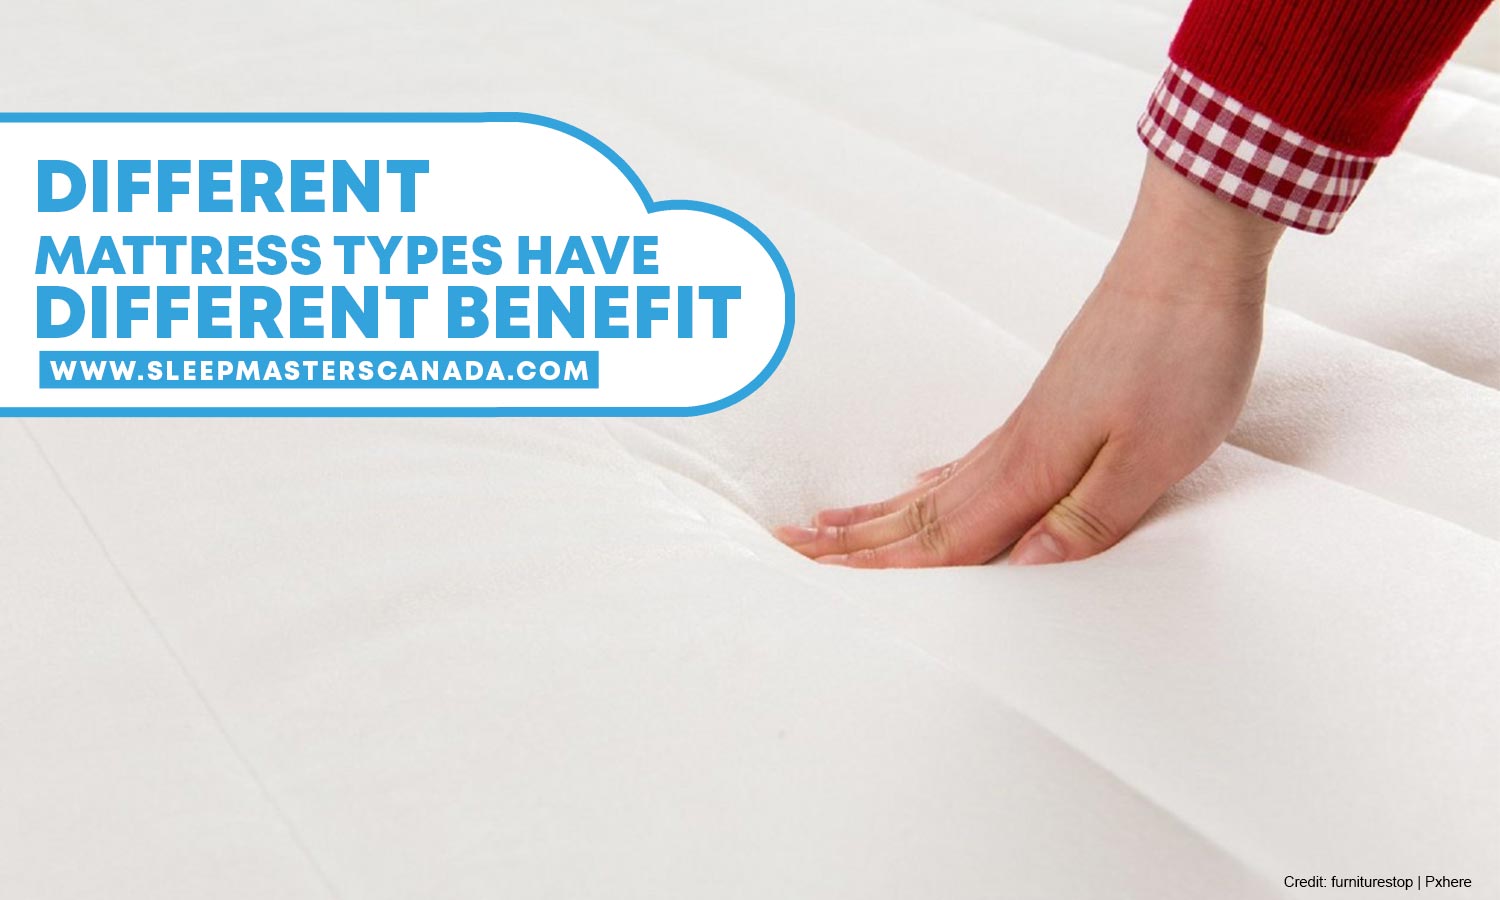 Different mattress types have different benefits